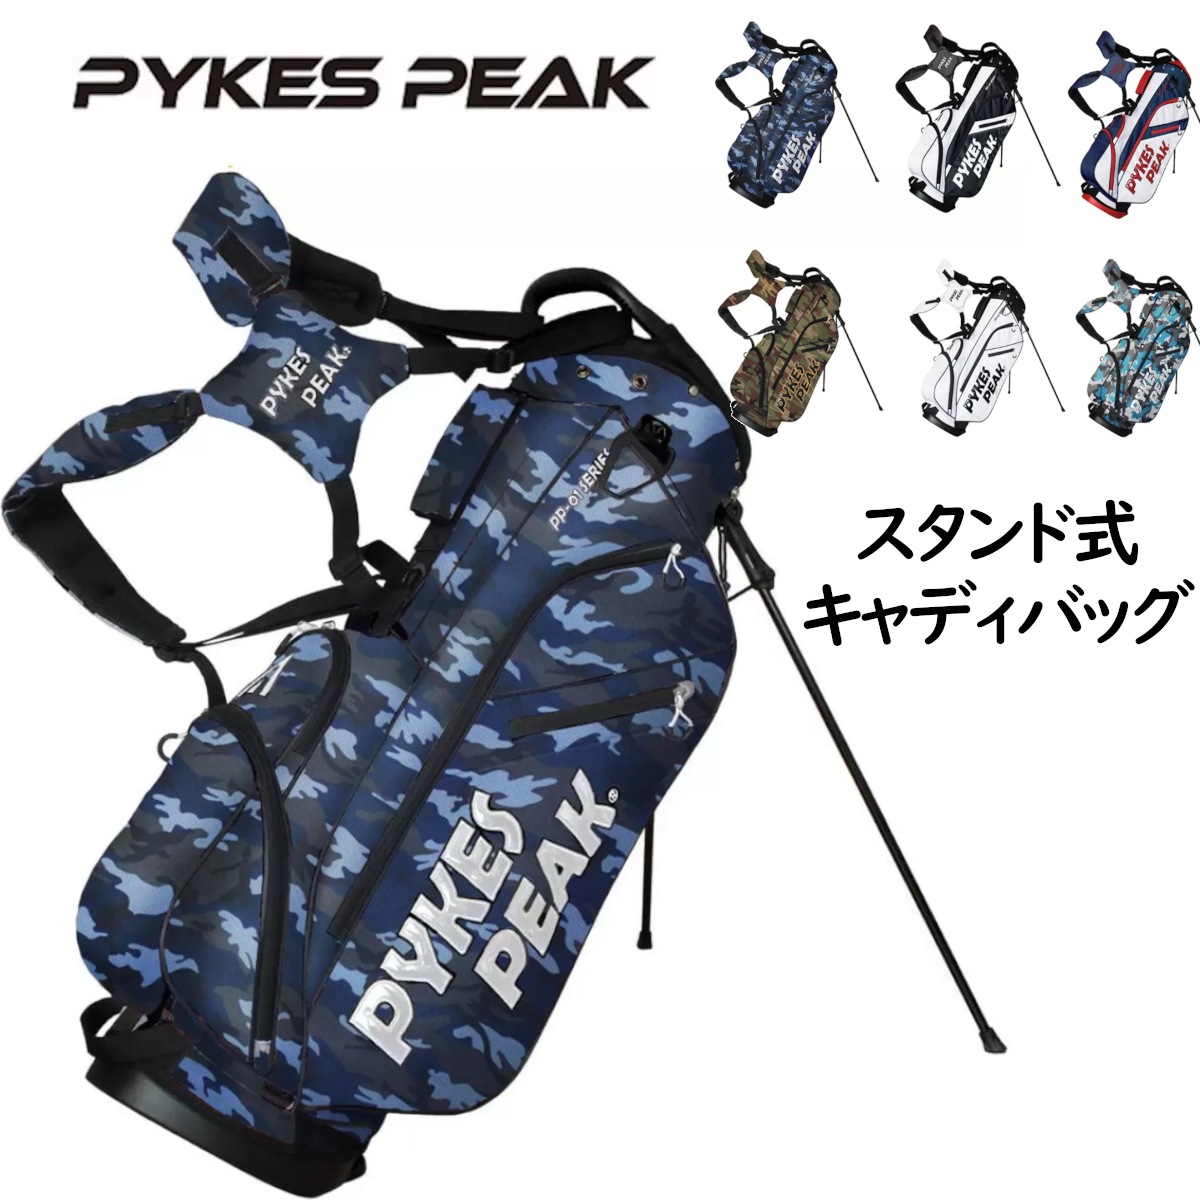 PYKES PEAKパイクスピーク スタンド式 キャディバッグ 413 ゴルフバッグ 超軽量2.2kg クラブ47インチ対応 ショルダー 収納ポケットいっぱい コストコ 直送品